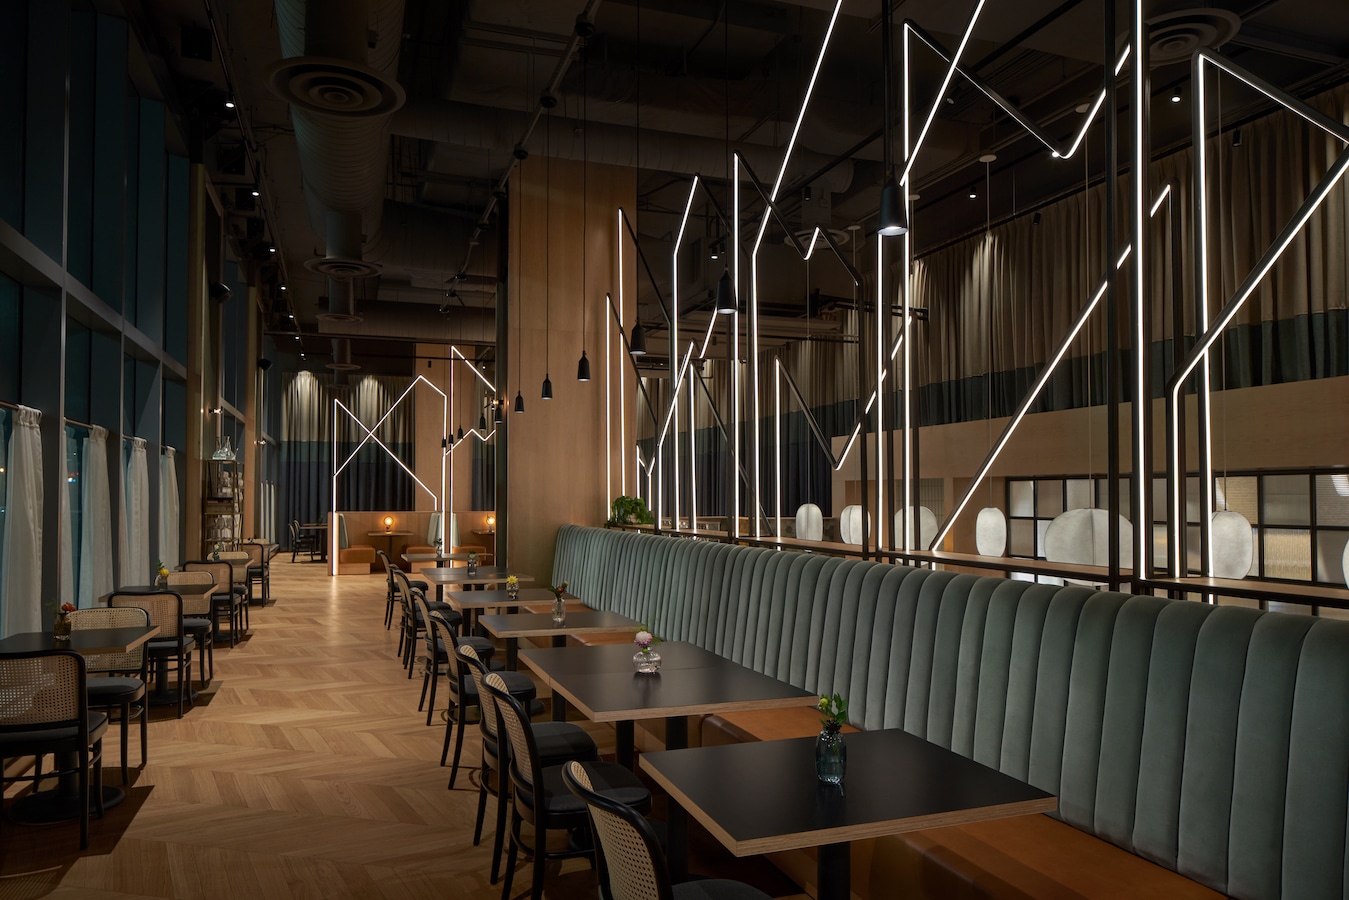 booths beneath intricate restaurant lighting